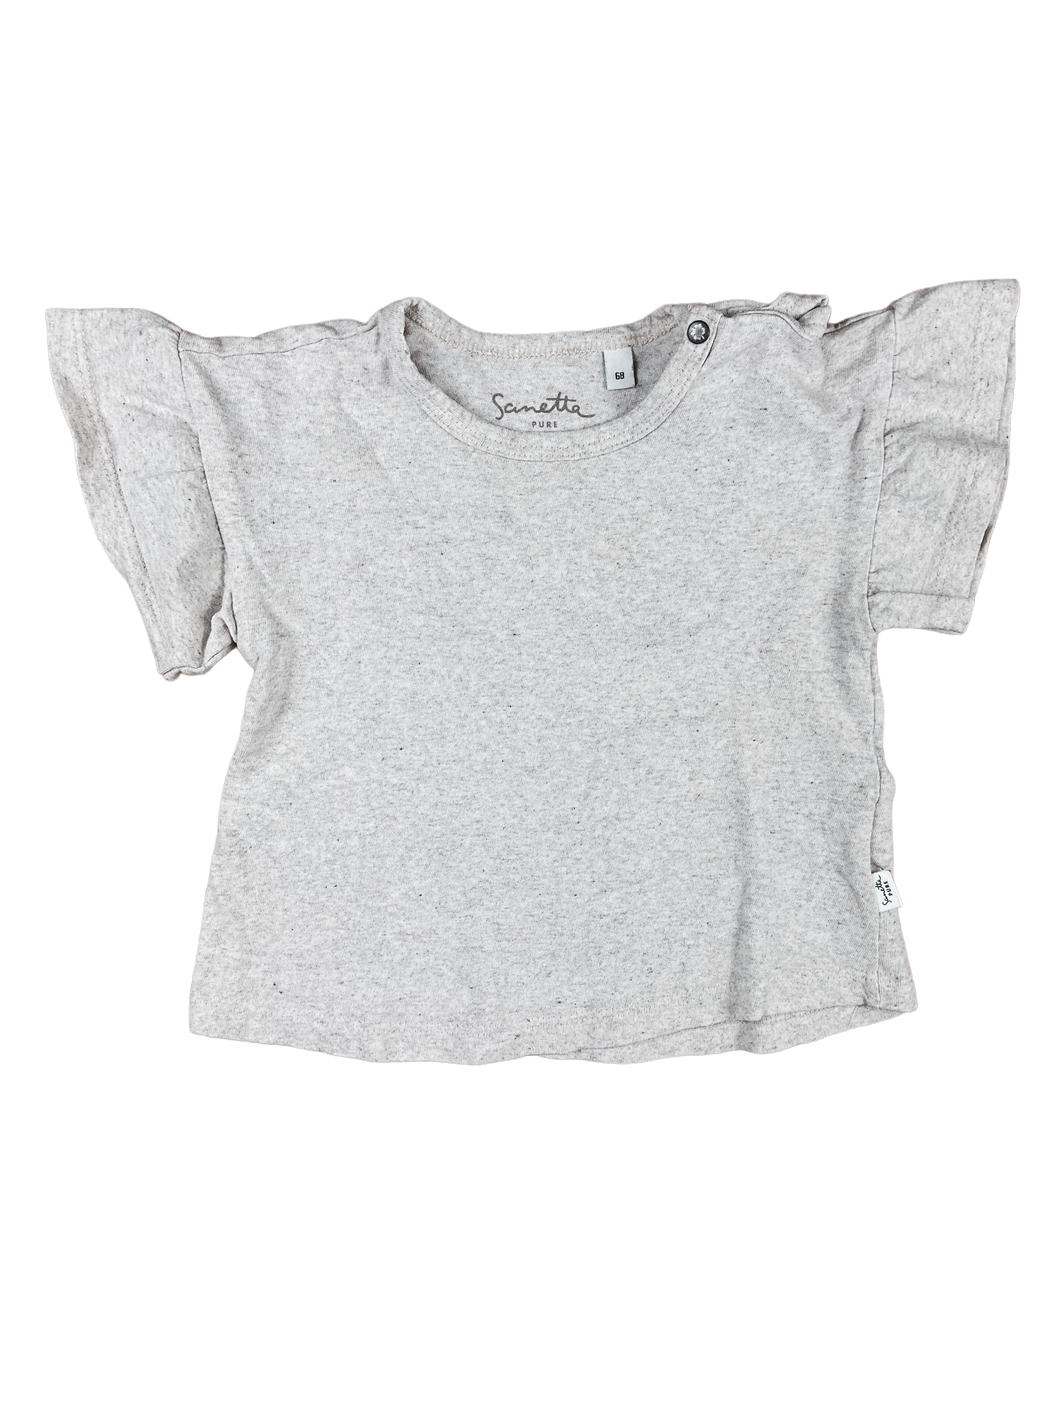 Samnetta T-Shirt Second Hand Baby Kleidung